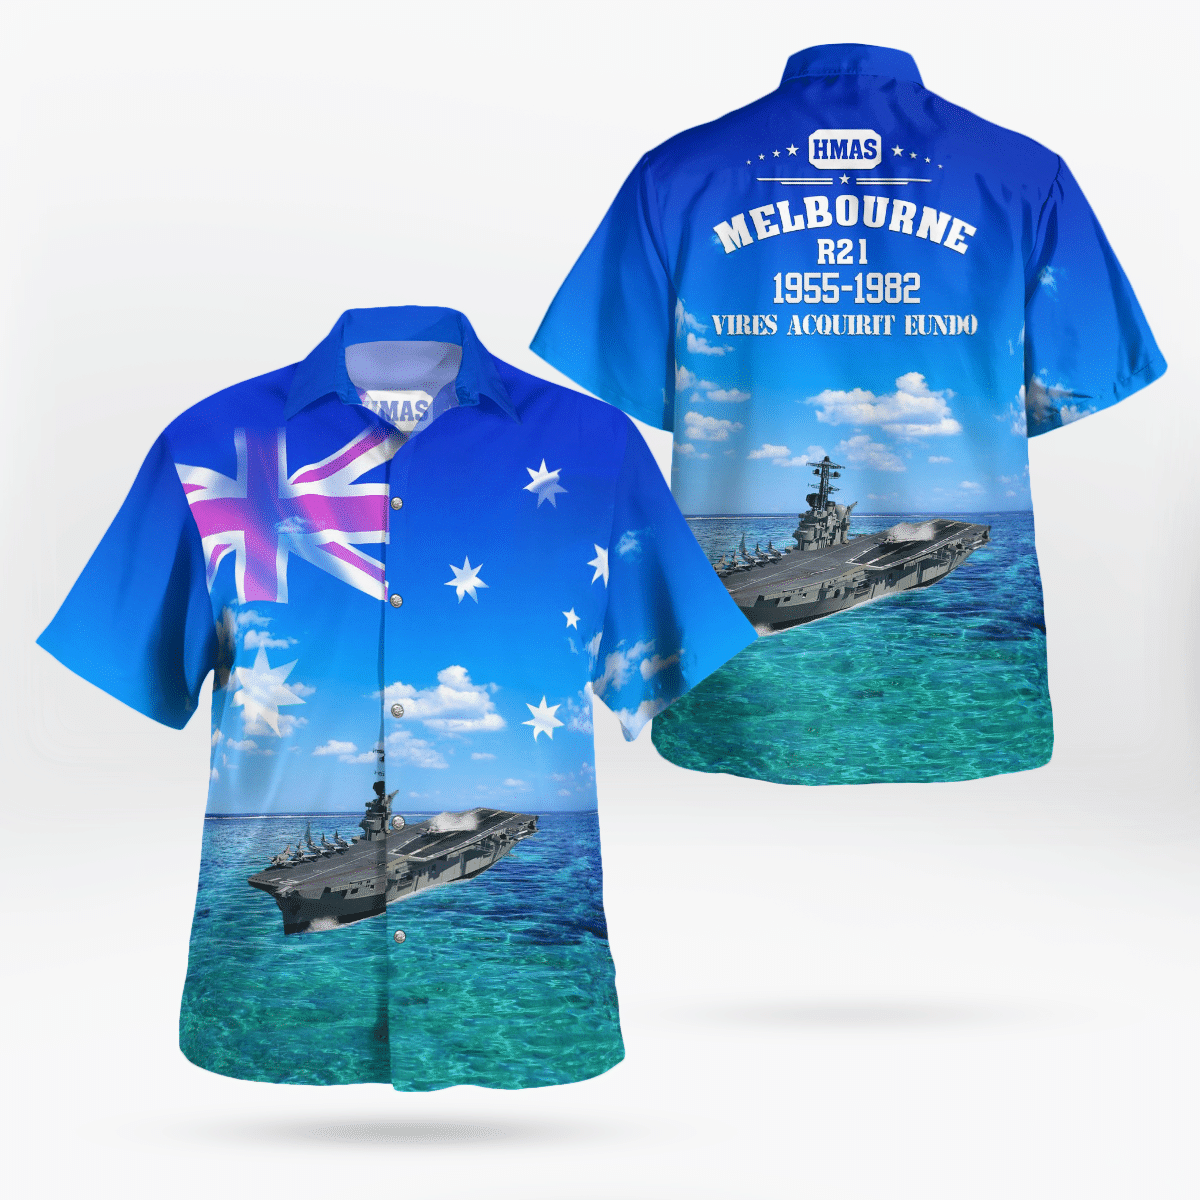 Get a new Hawaiian shirt to enjoy summer vacation 260